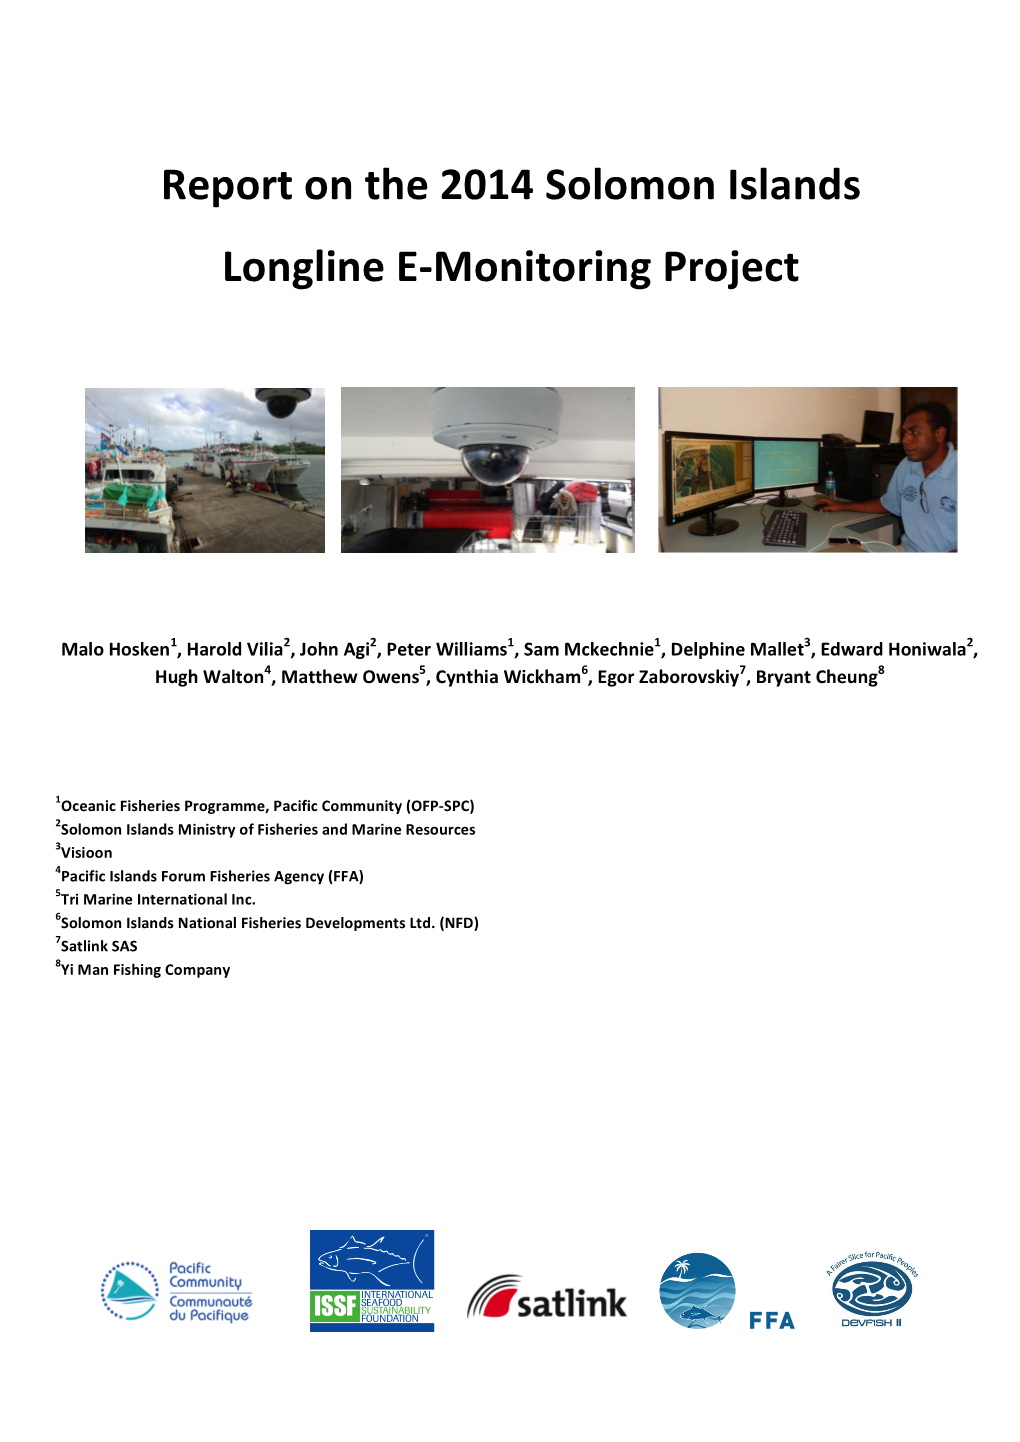 Hosken 2016 Solomon Islands E-Monitoring Project Report